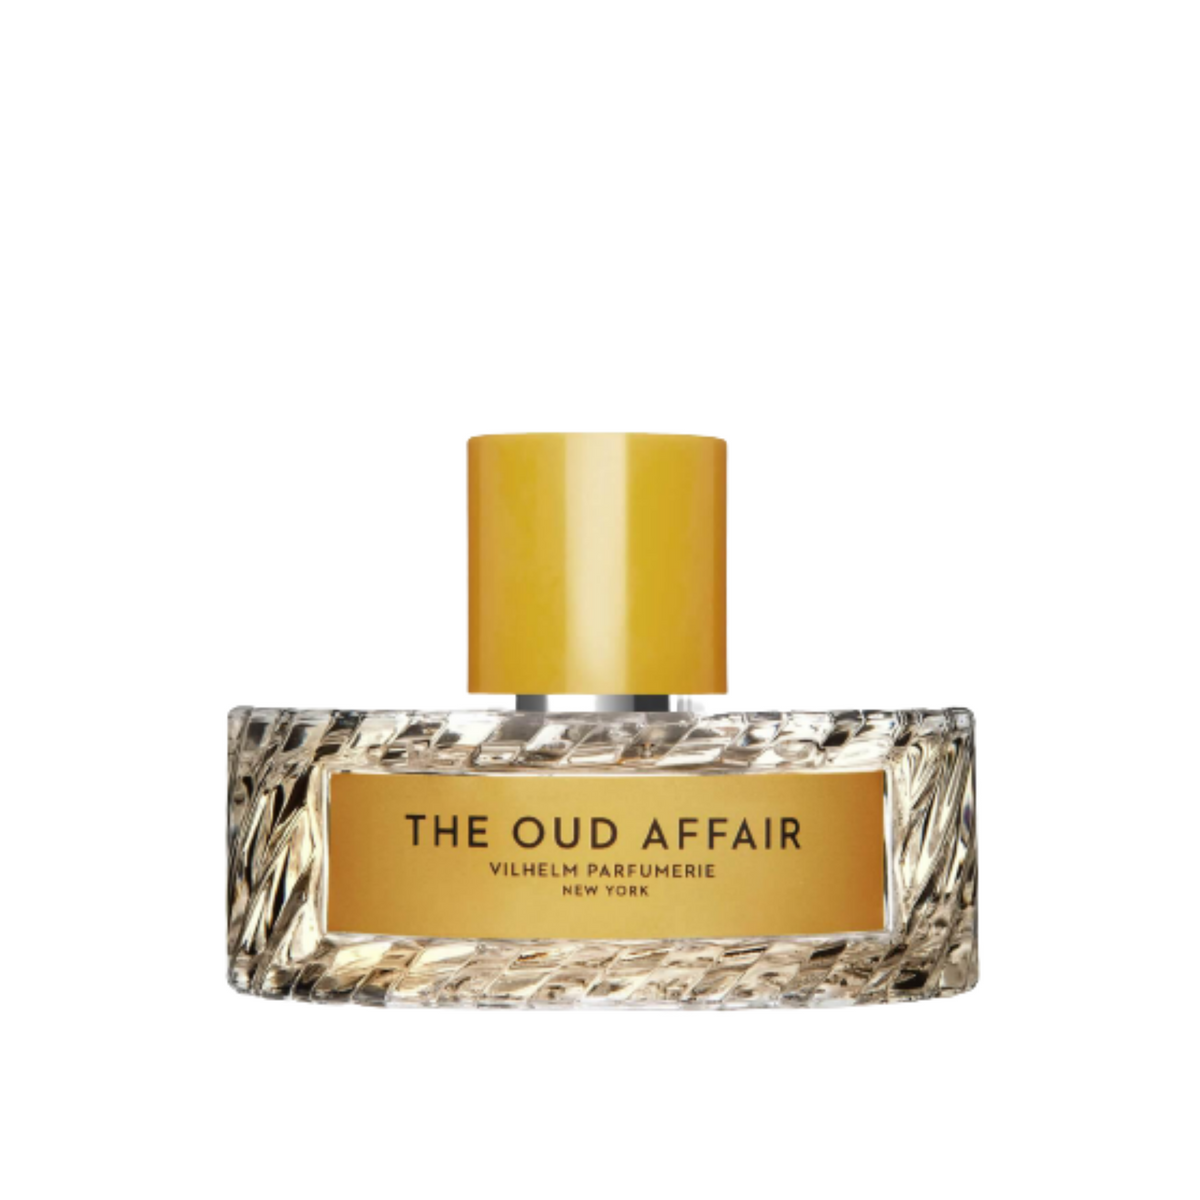 Primary Image of Parfumerie The Oud Affair EDP